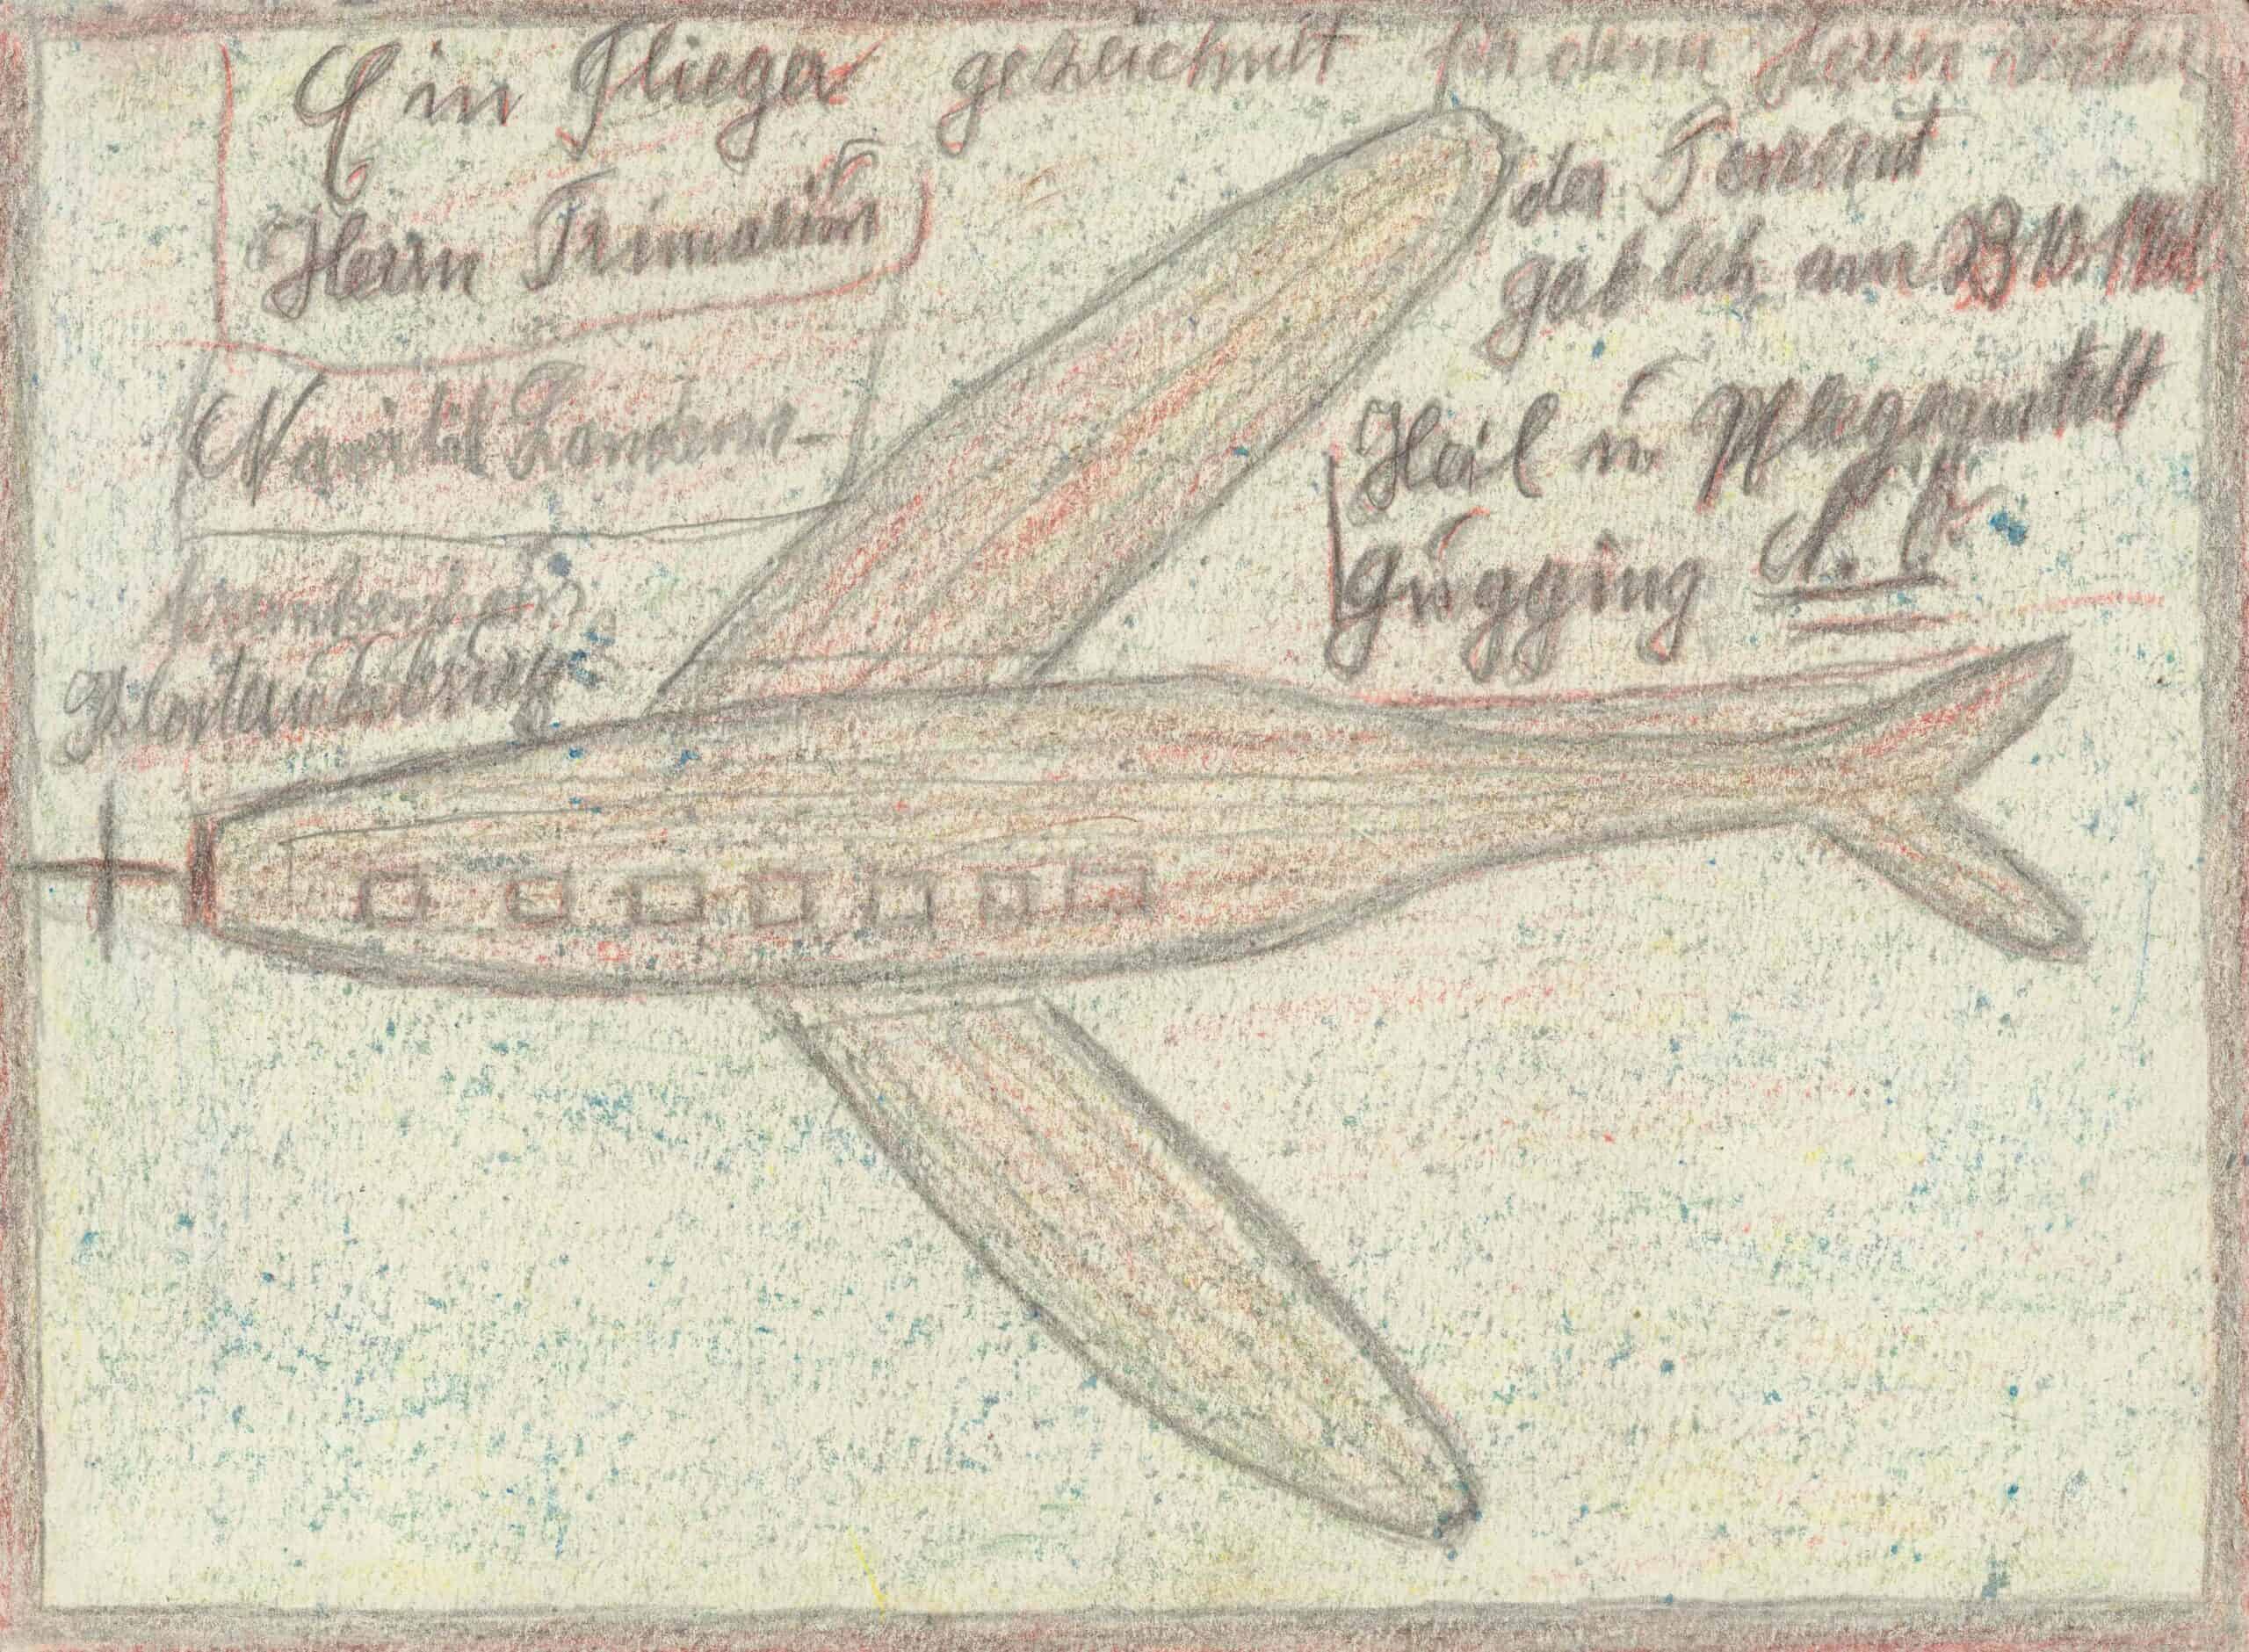 gableck franz - Ein Flieger / A plane